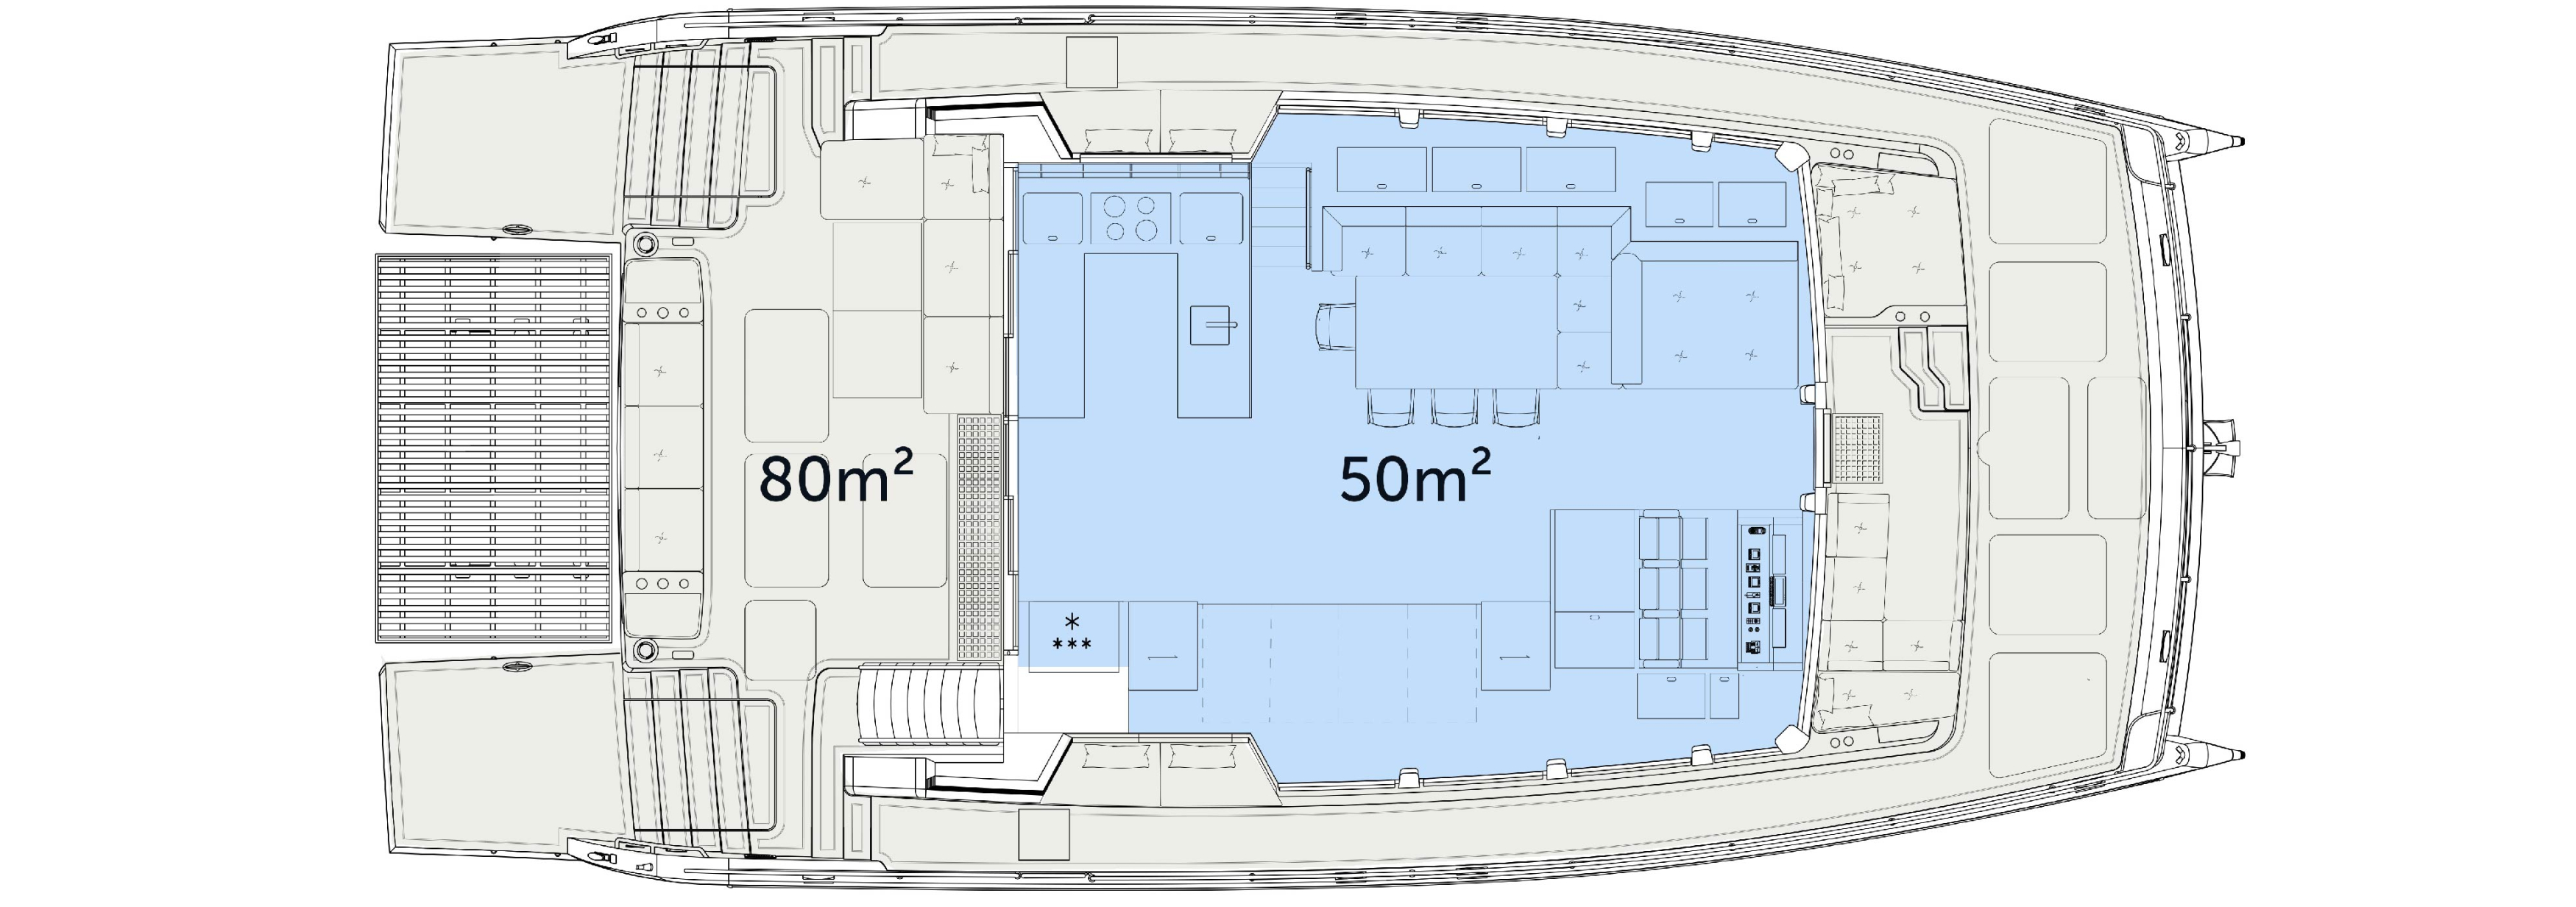 Yacht main deck front exit area plan